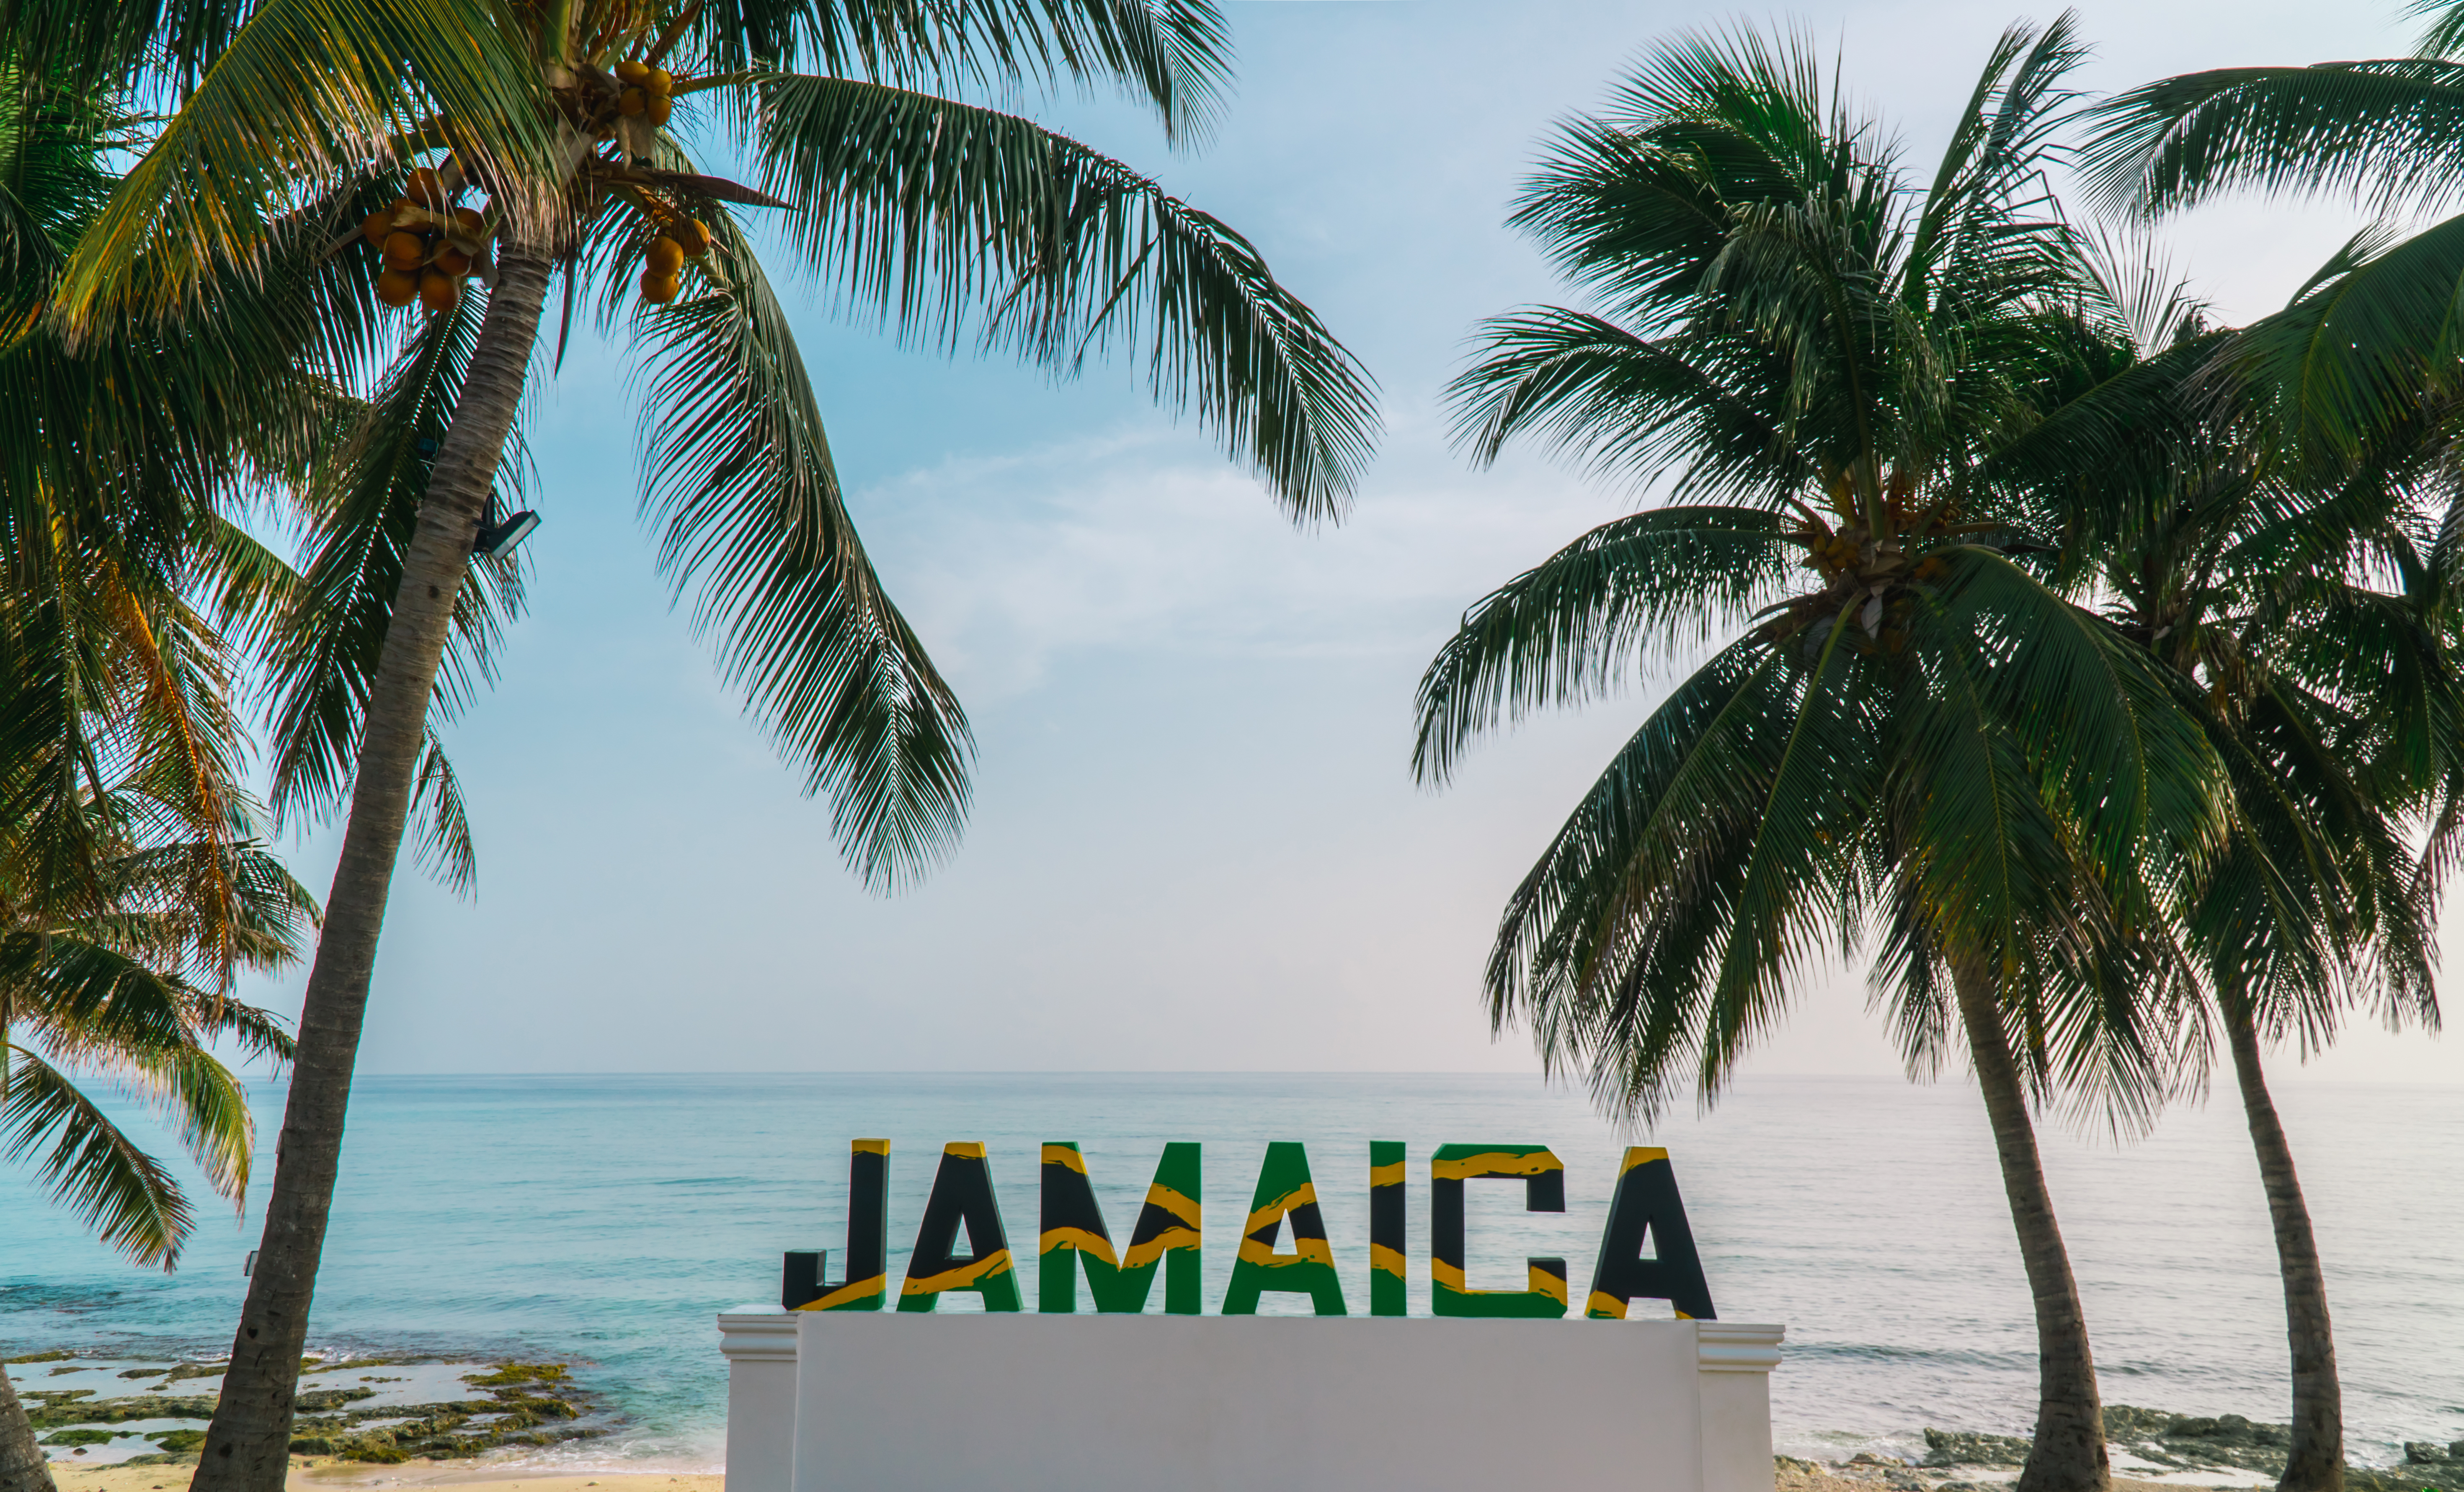 Побережье Ямайки, где работа доступна для иностранцев